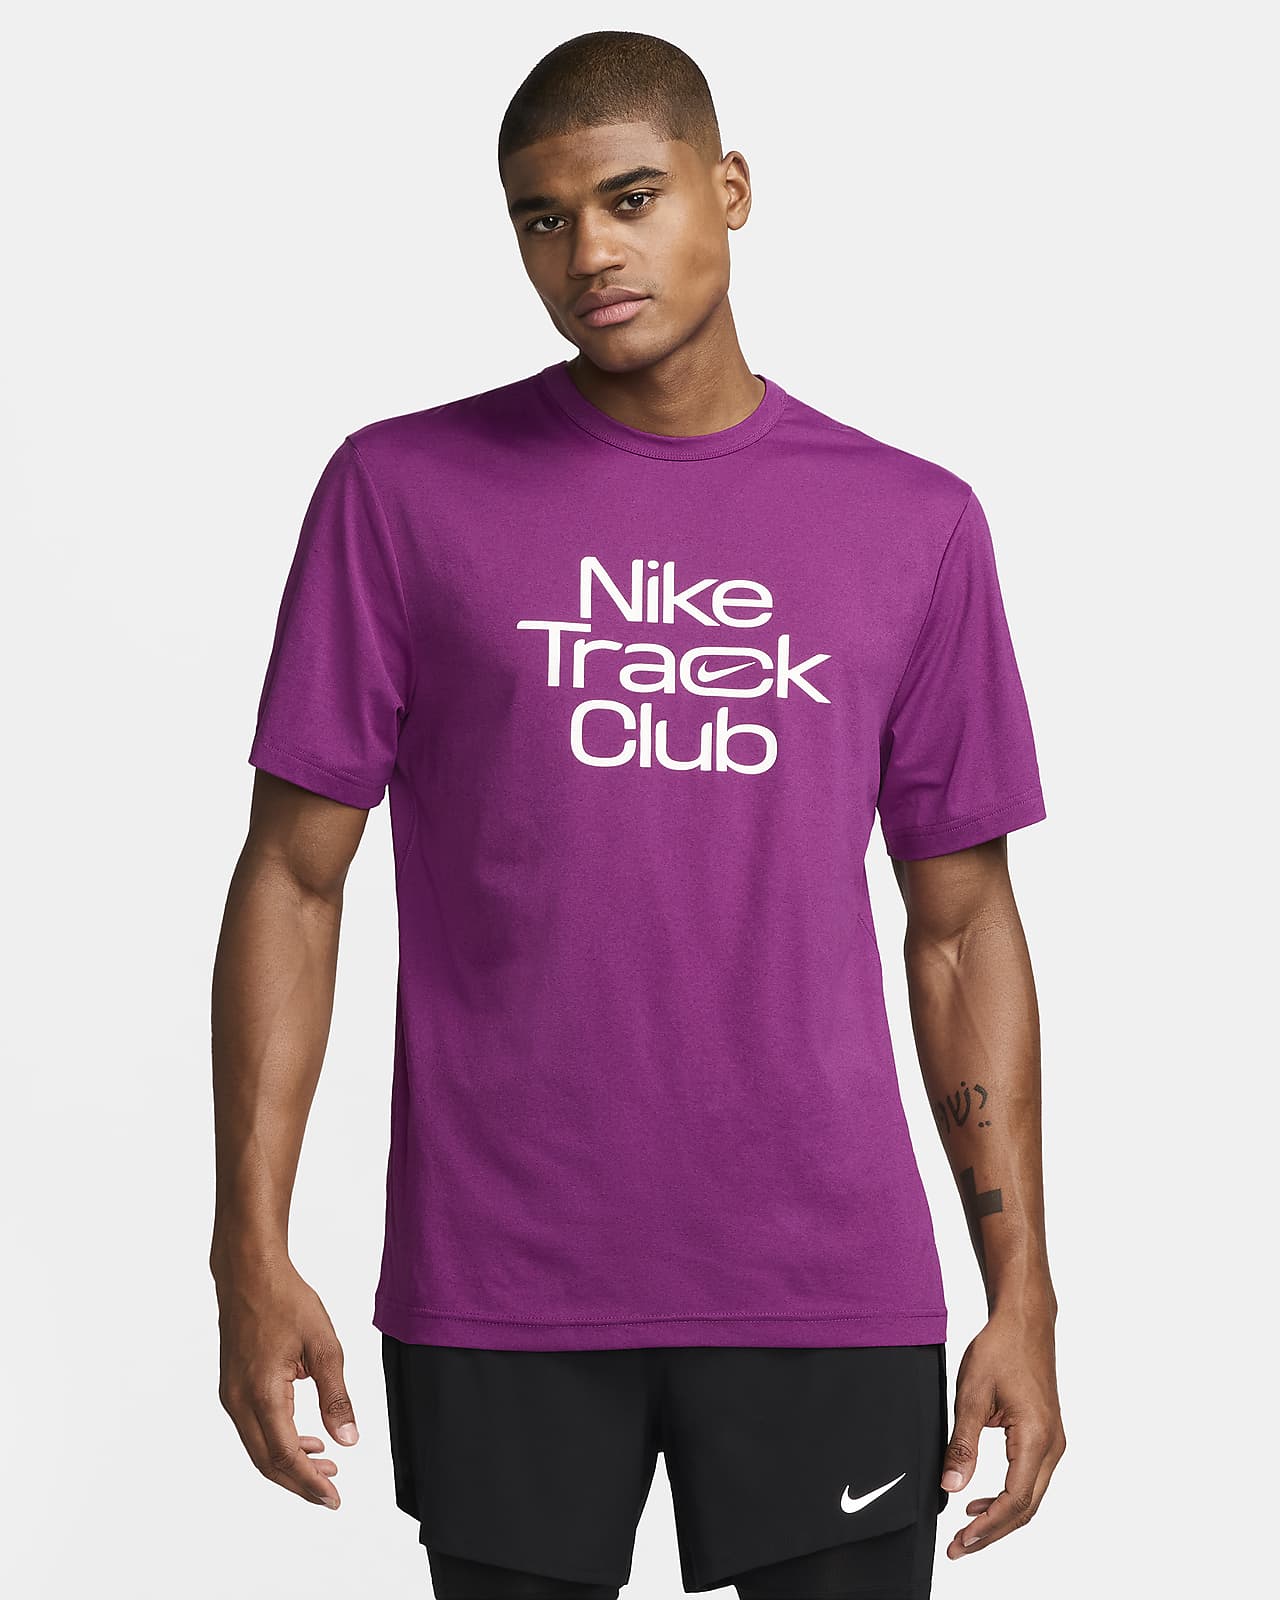 Playera de running de manga corta Dri-FIT para hombre Nike Track Club